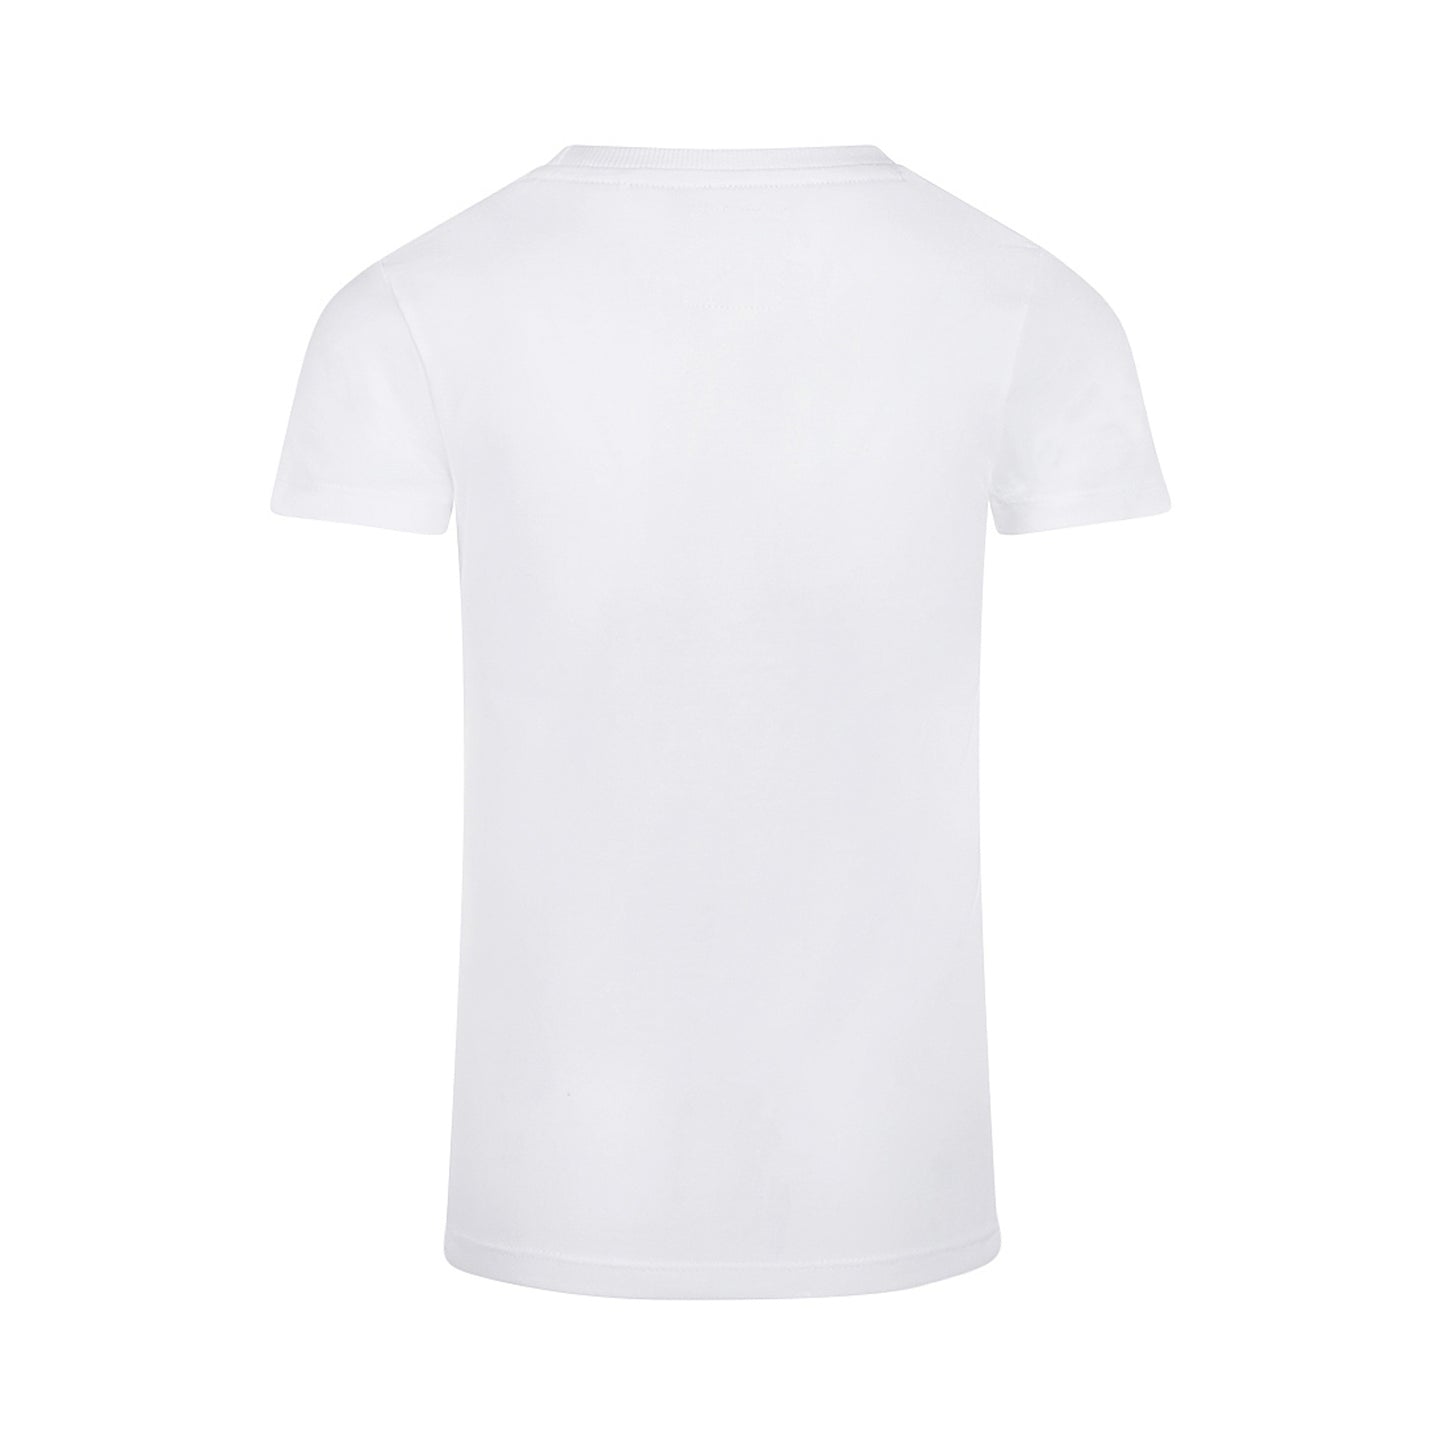 T-shirt ss (White)